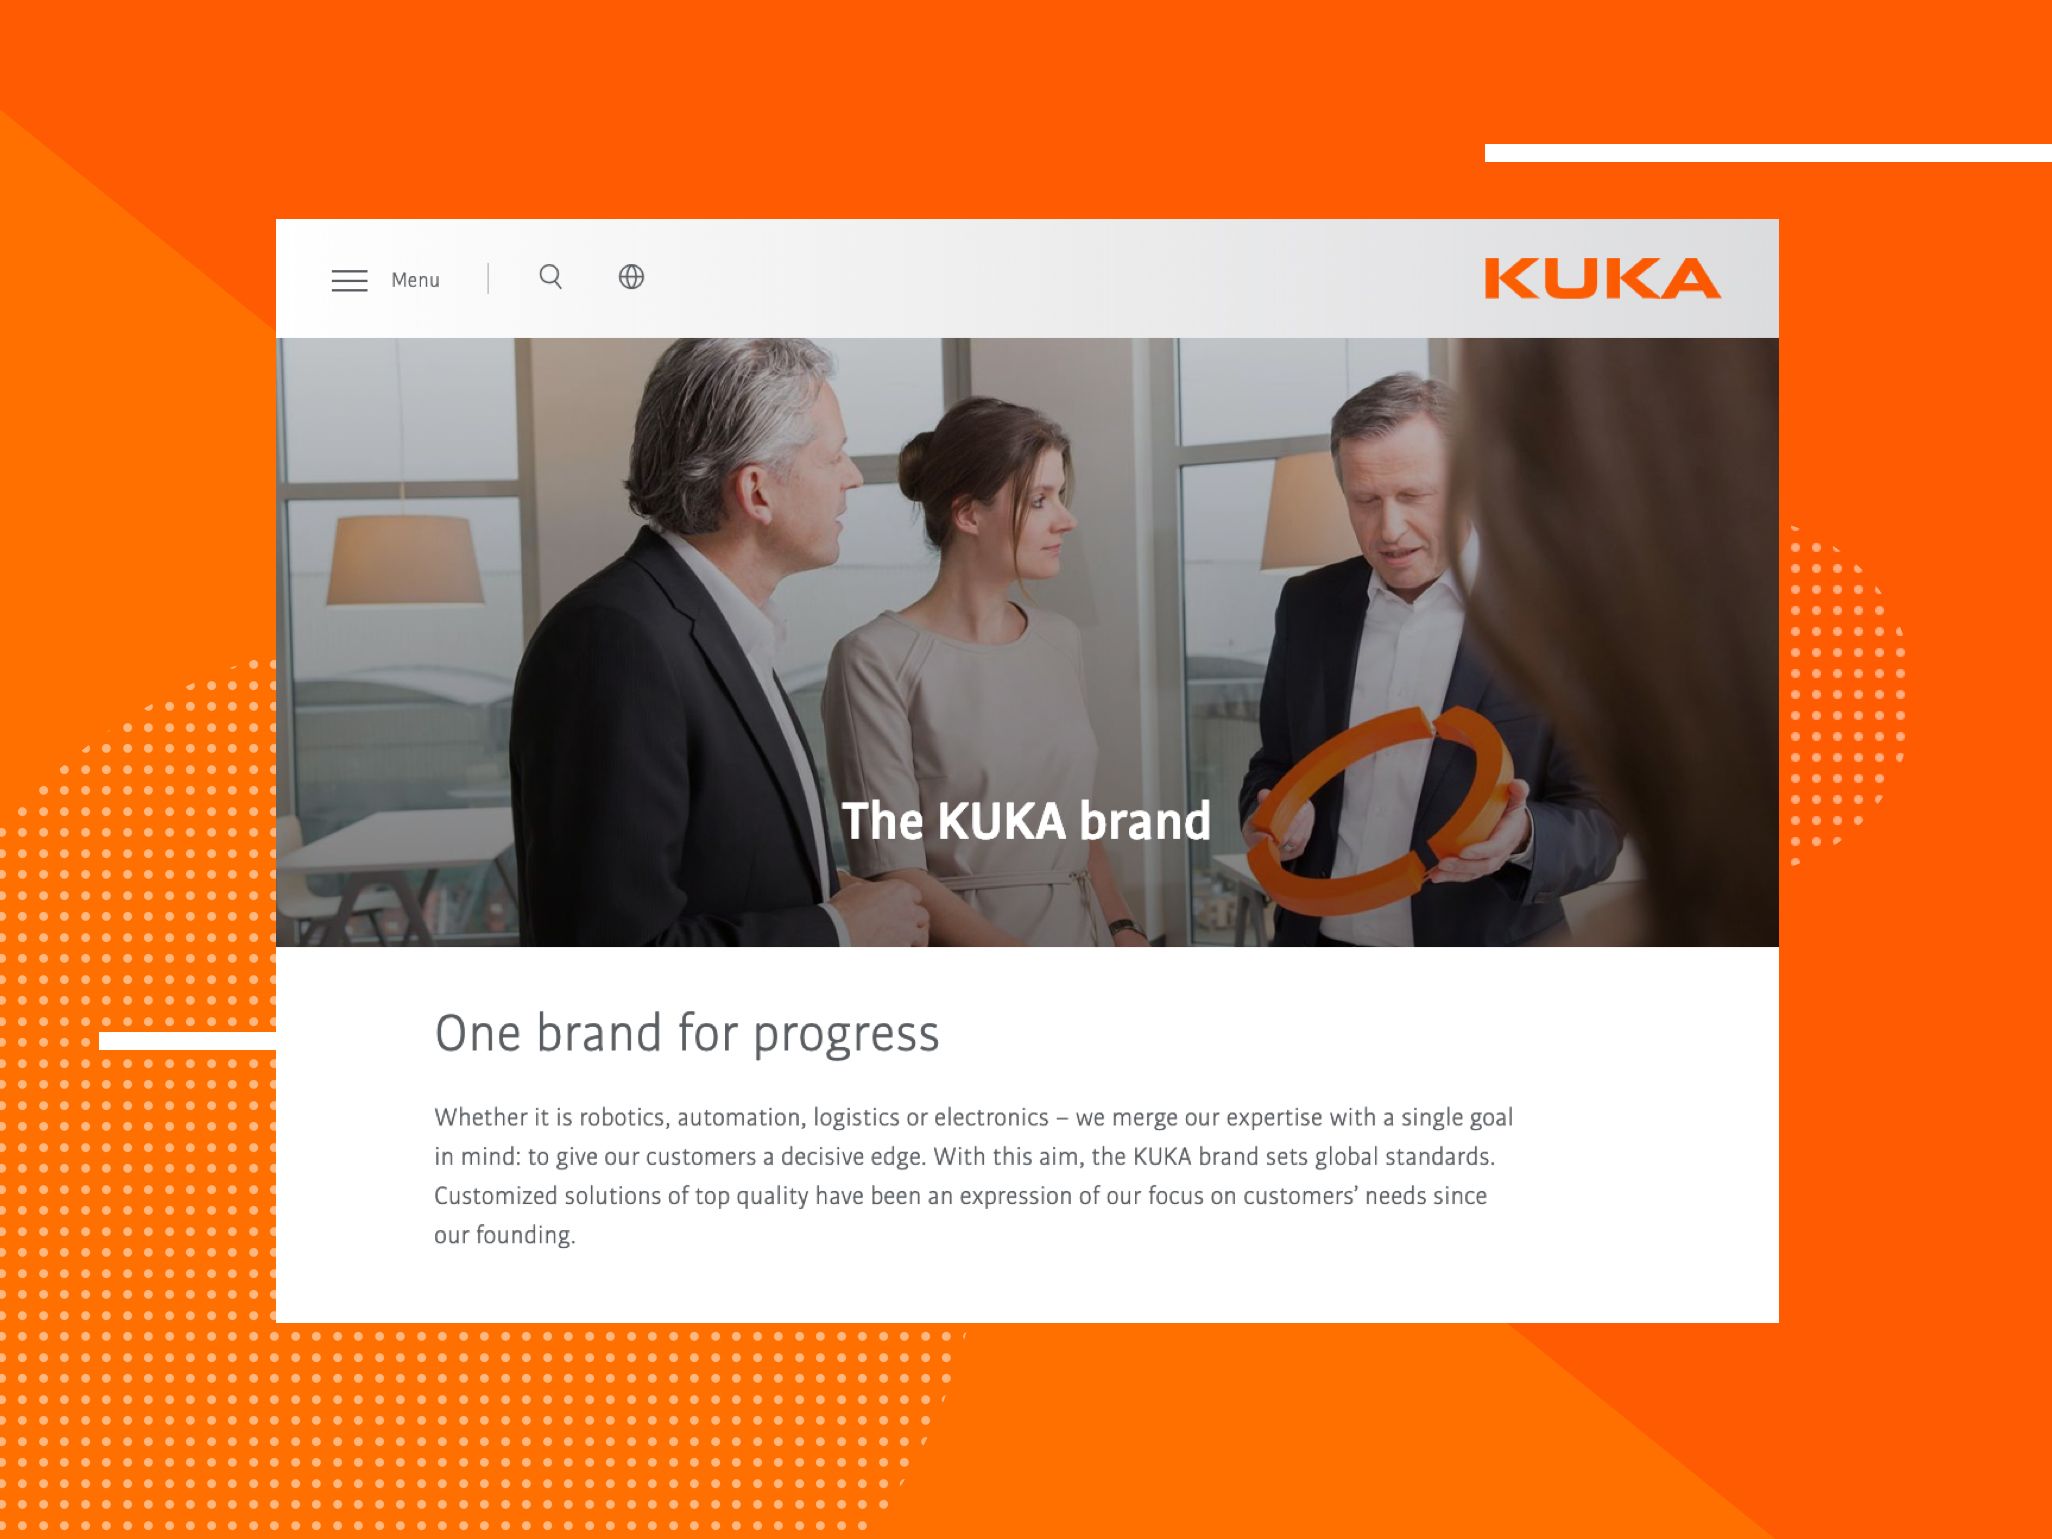 Website-Bild: Kuka als Marke